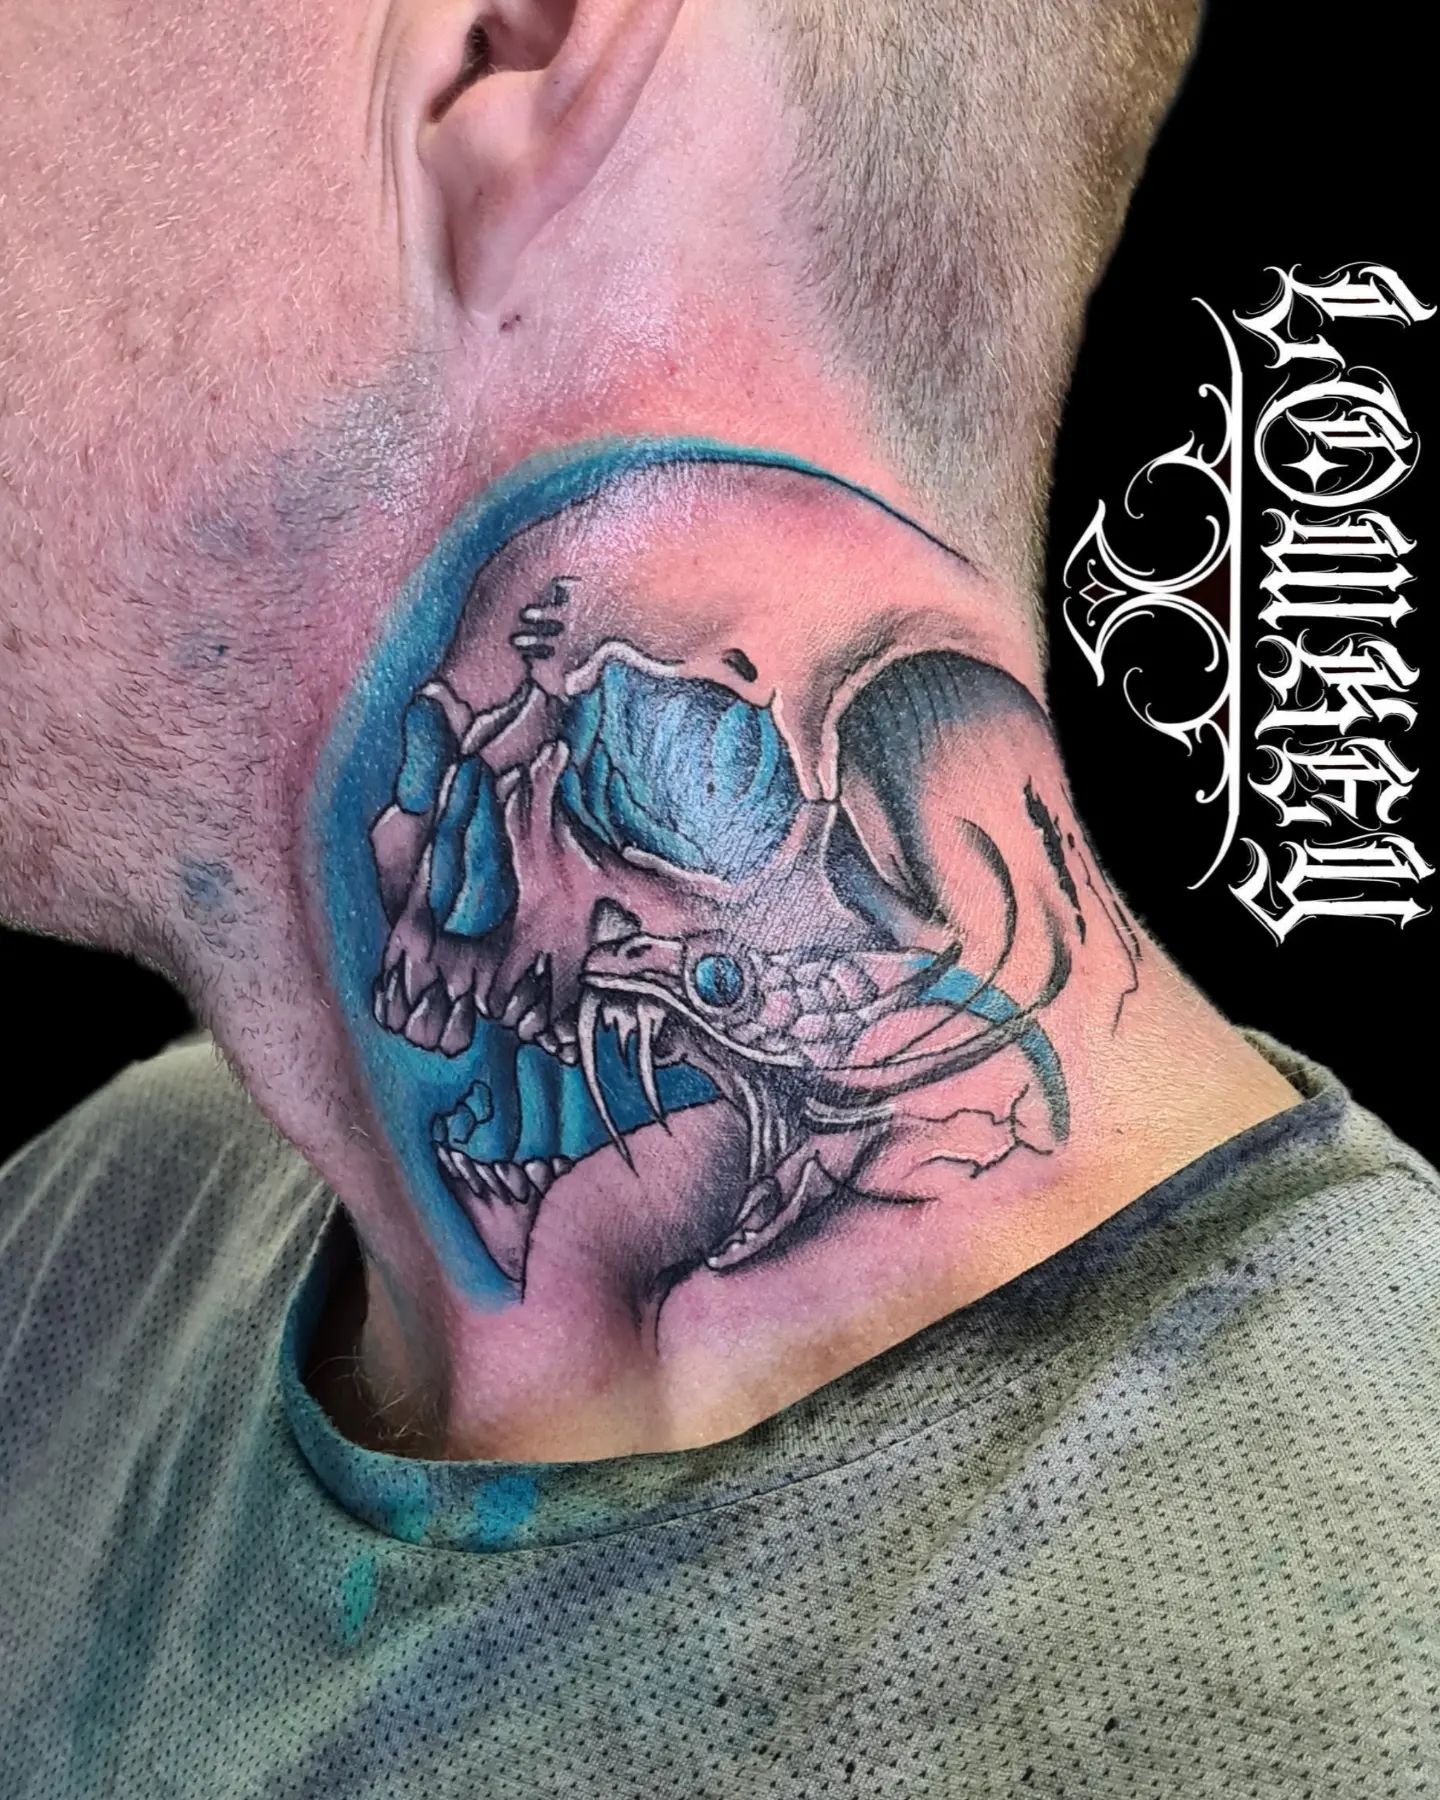 Tatuaje de una calavera colorida en la garganta.